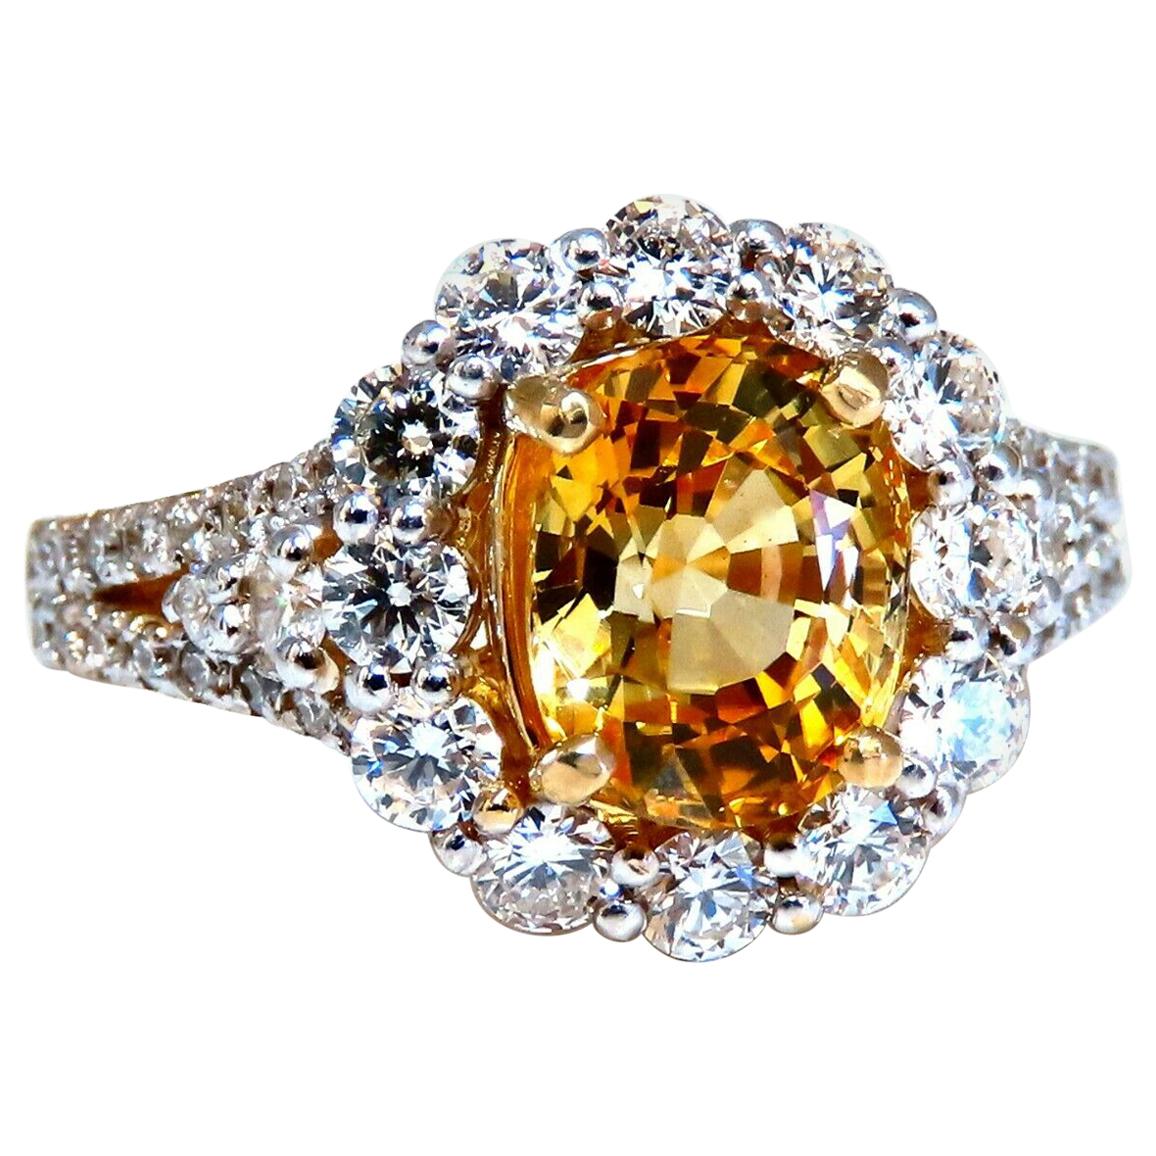 Bague en or 14 carats avec diamants et saphirs naturels jaunes de 2,59 carats certifiés GIA